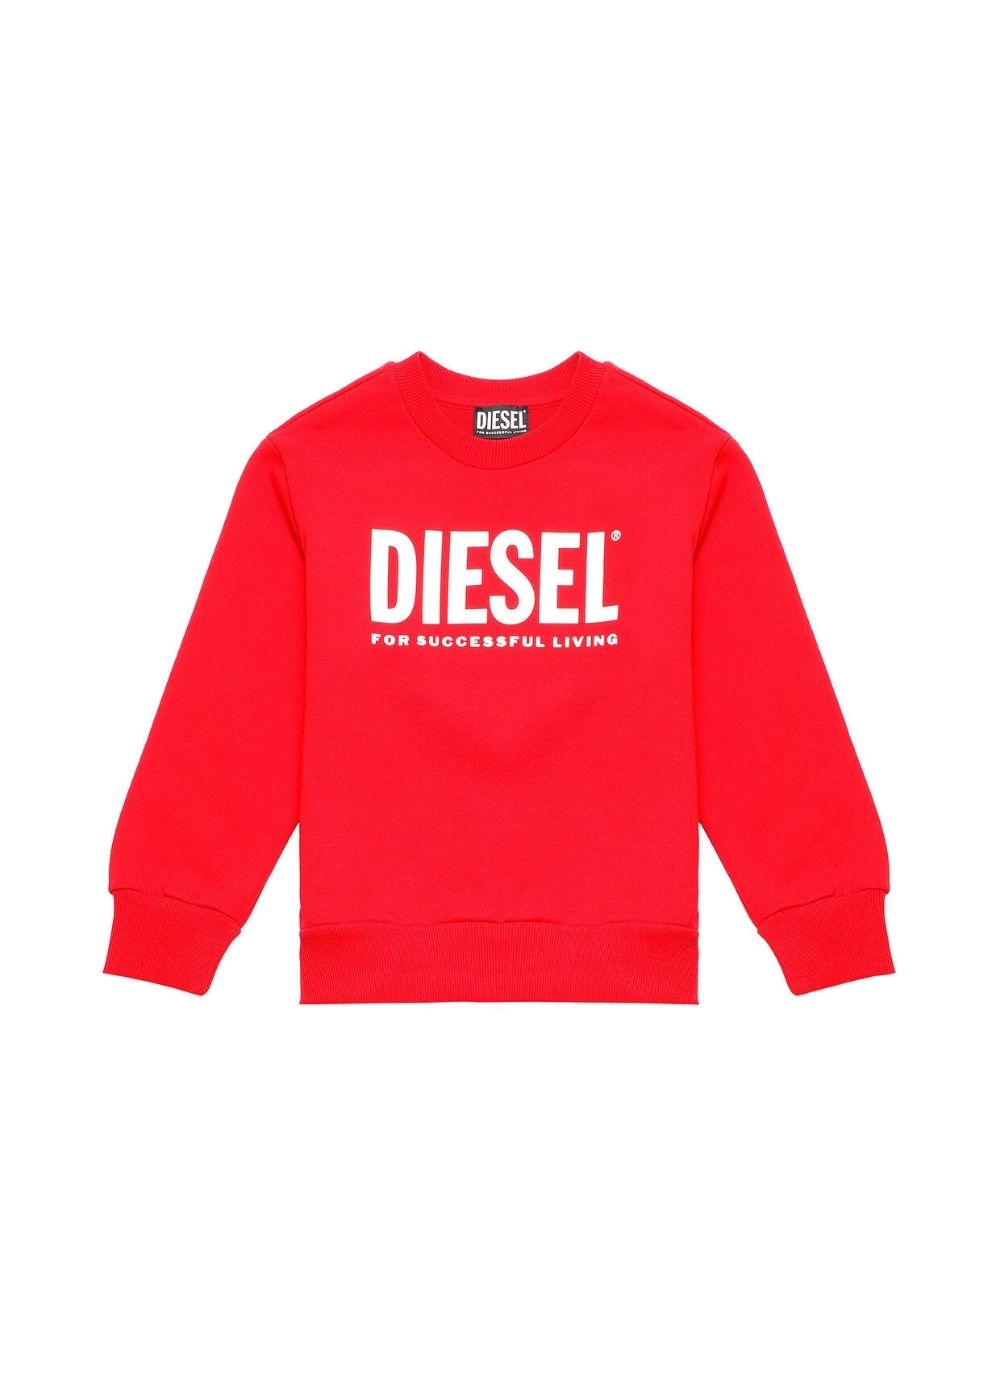 Featured image for “Diesel Felpa girocollo”